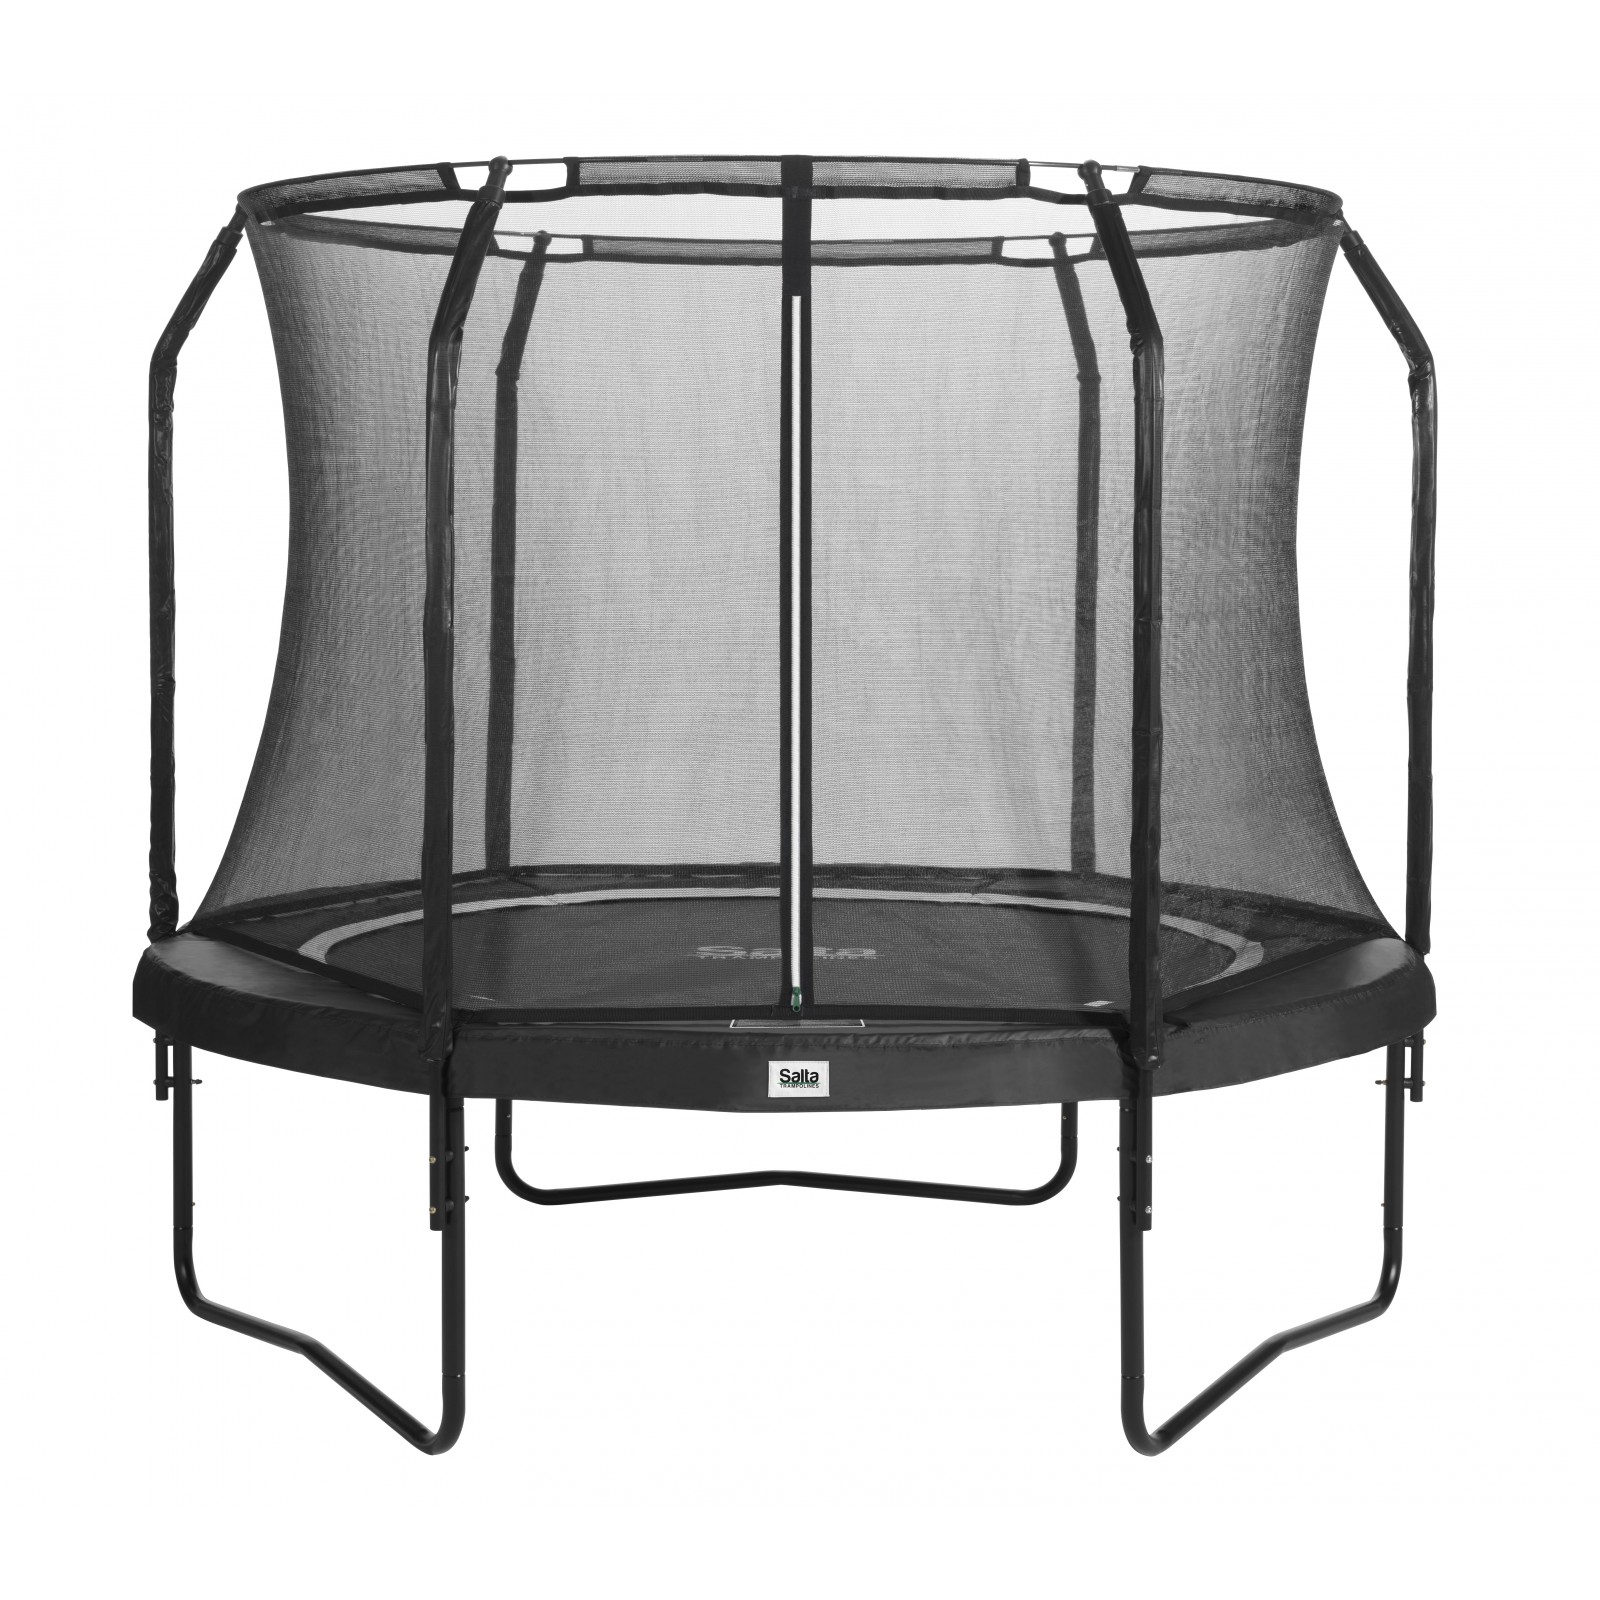 Booth blur tre Salta trampoline Premium Black Edition buy with 16 customer ratings -  Fitshop